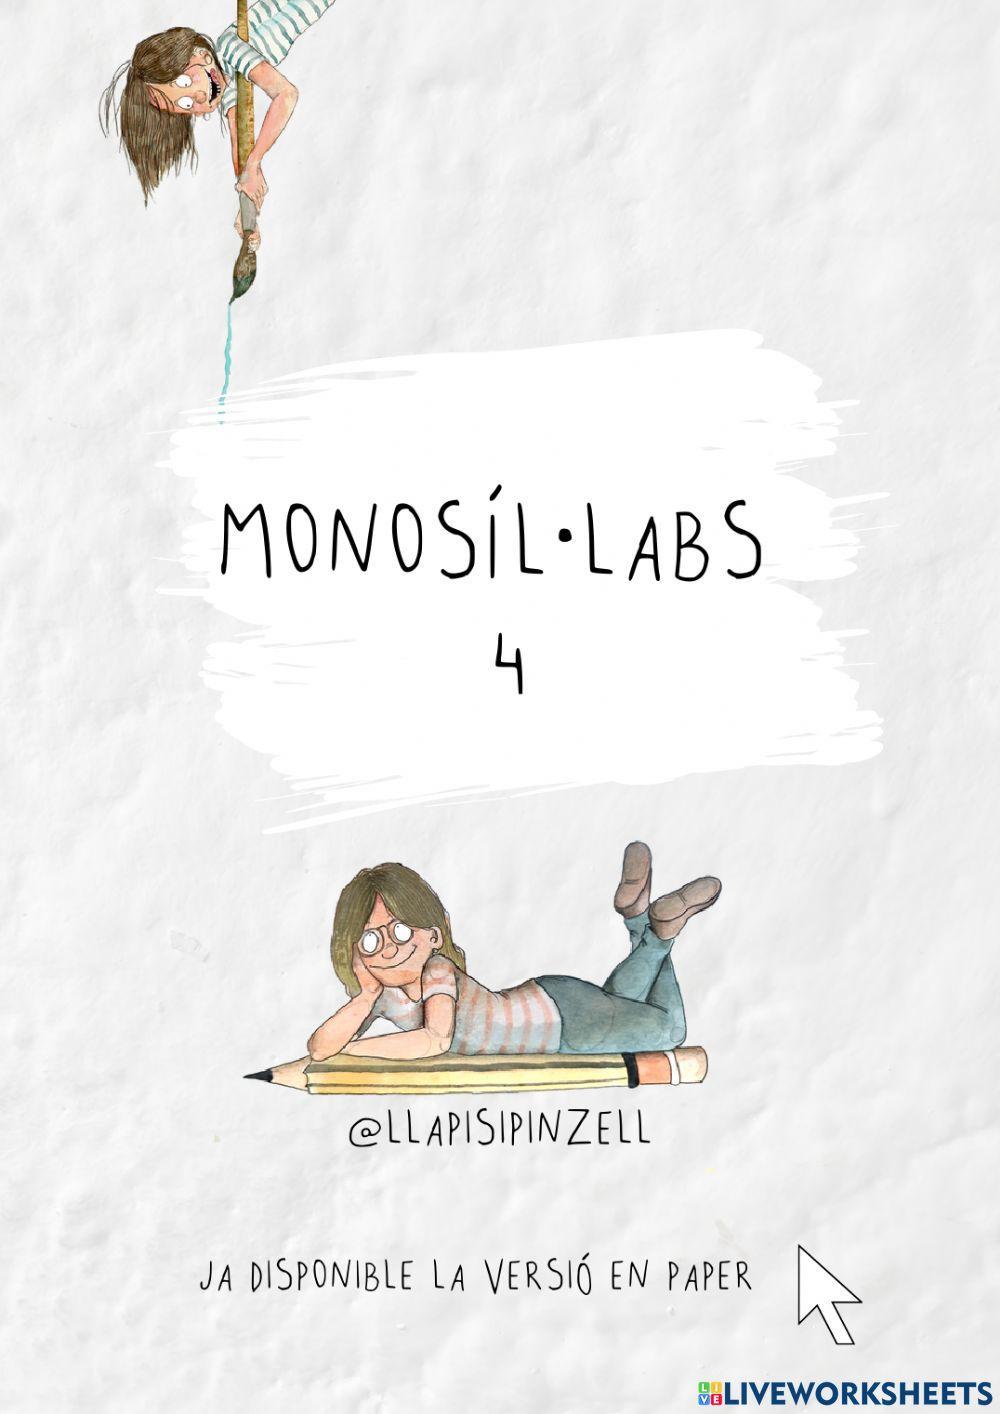 monosíl·labs 4